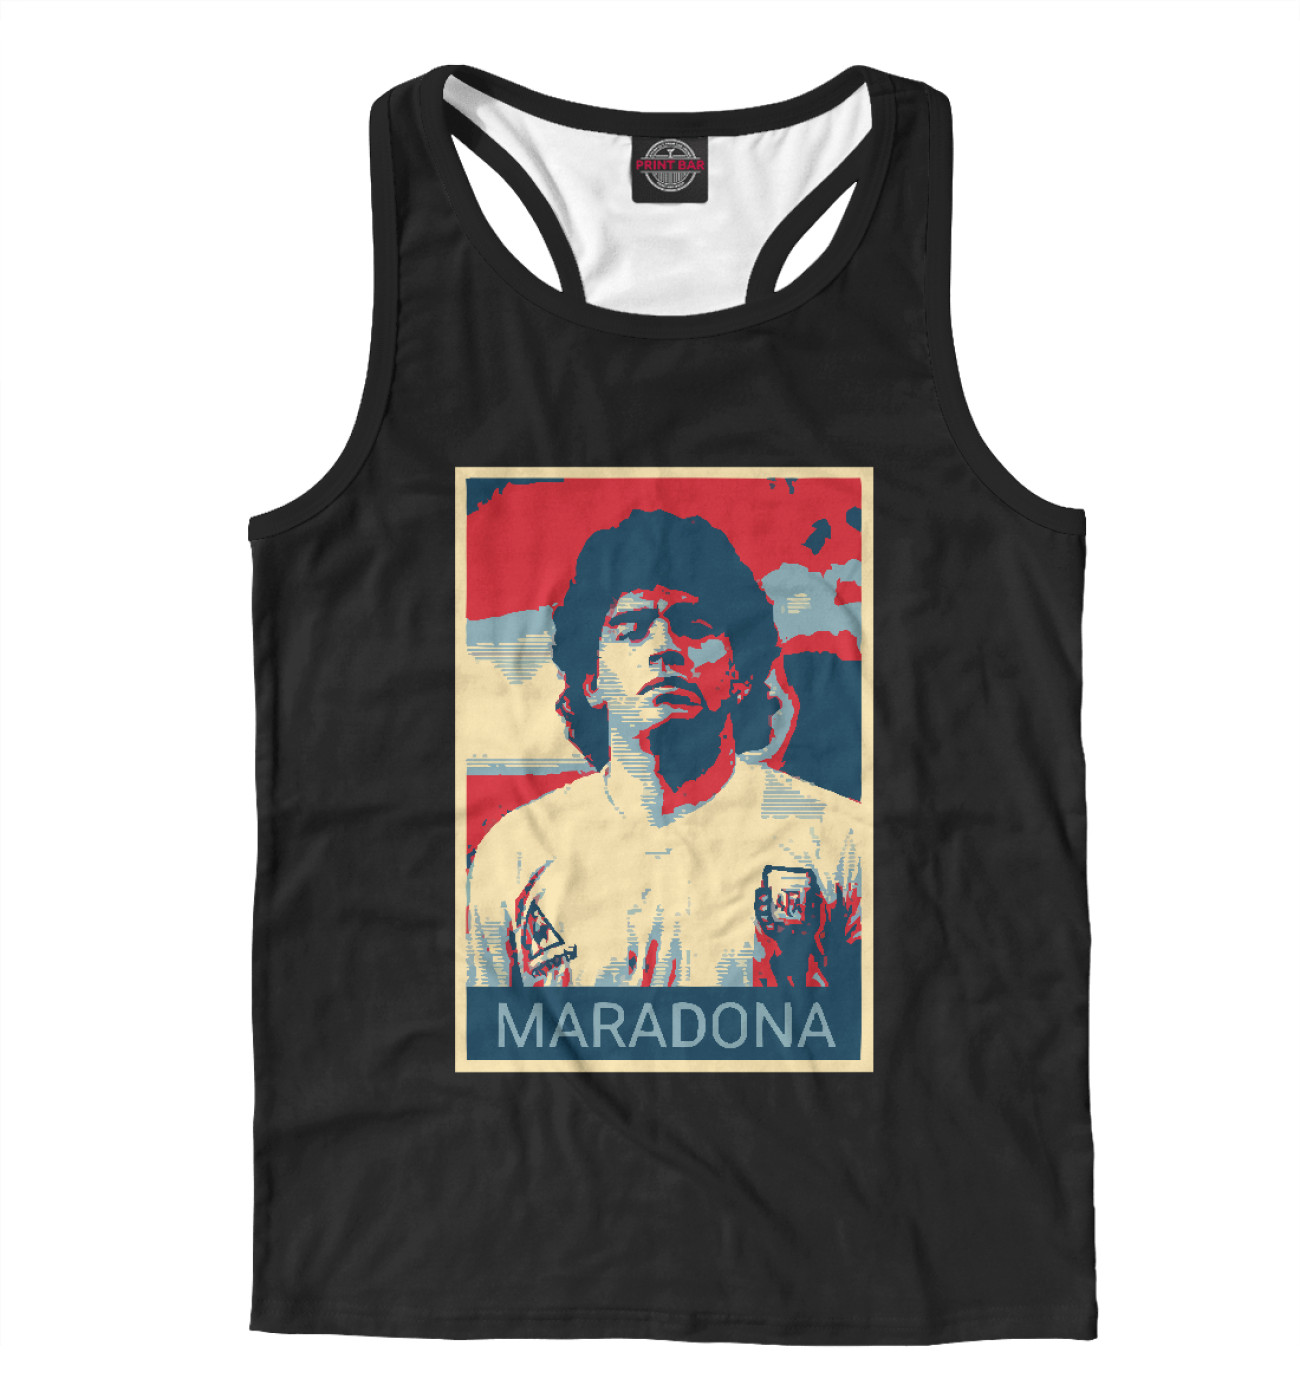 Мужская Борцовка Maradona, артикул: FLT-836145-mayb-2